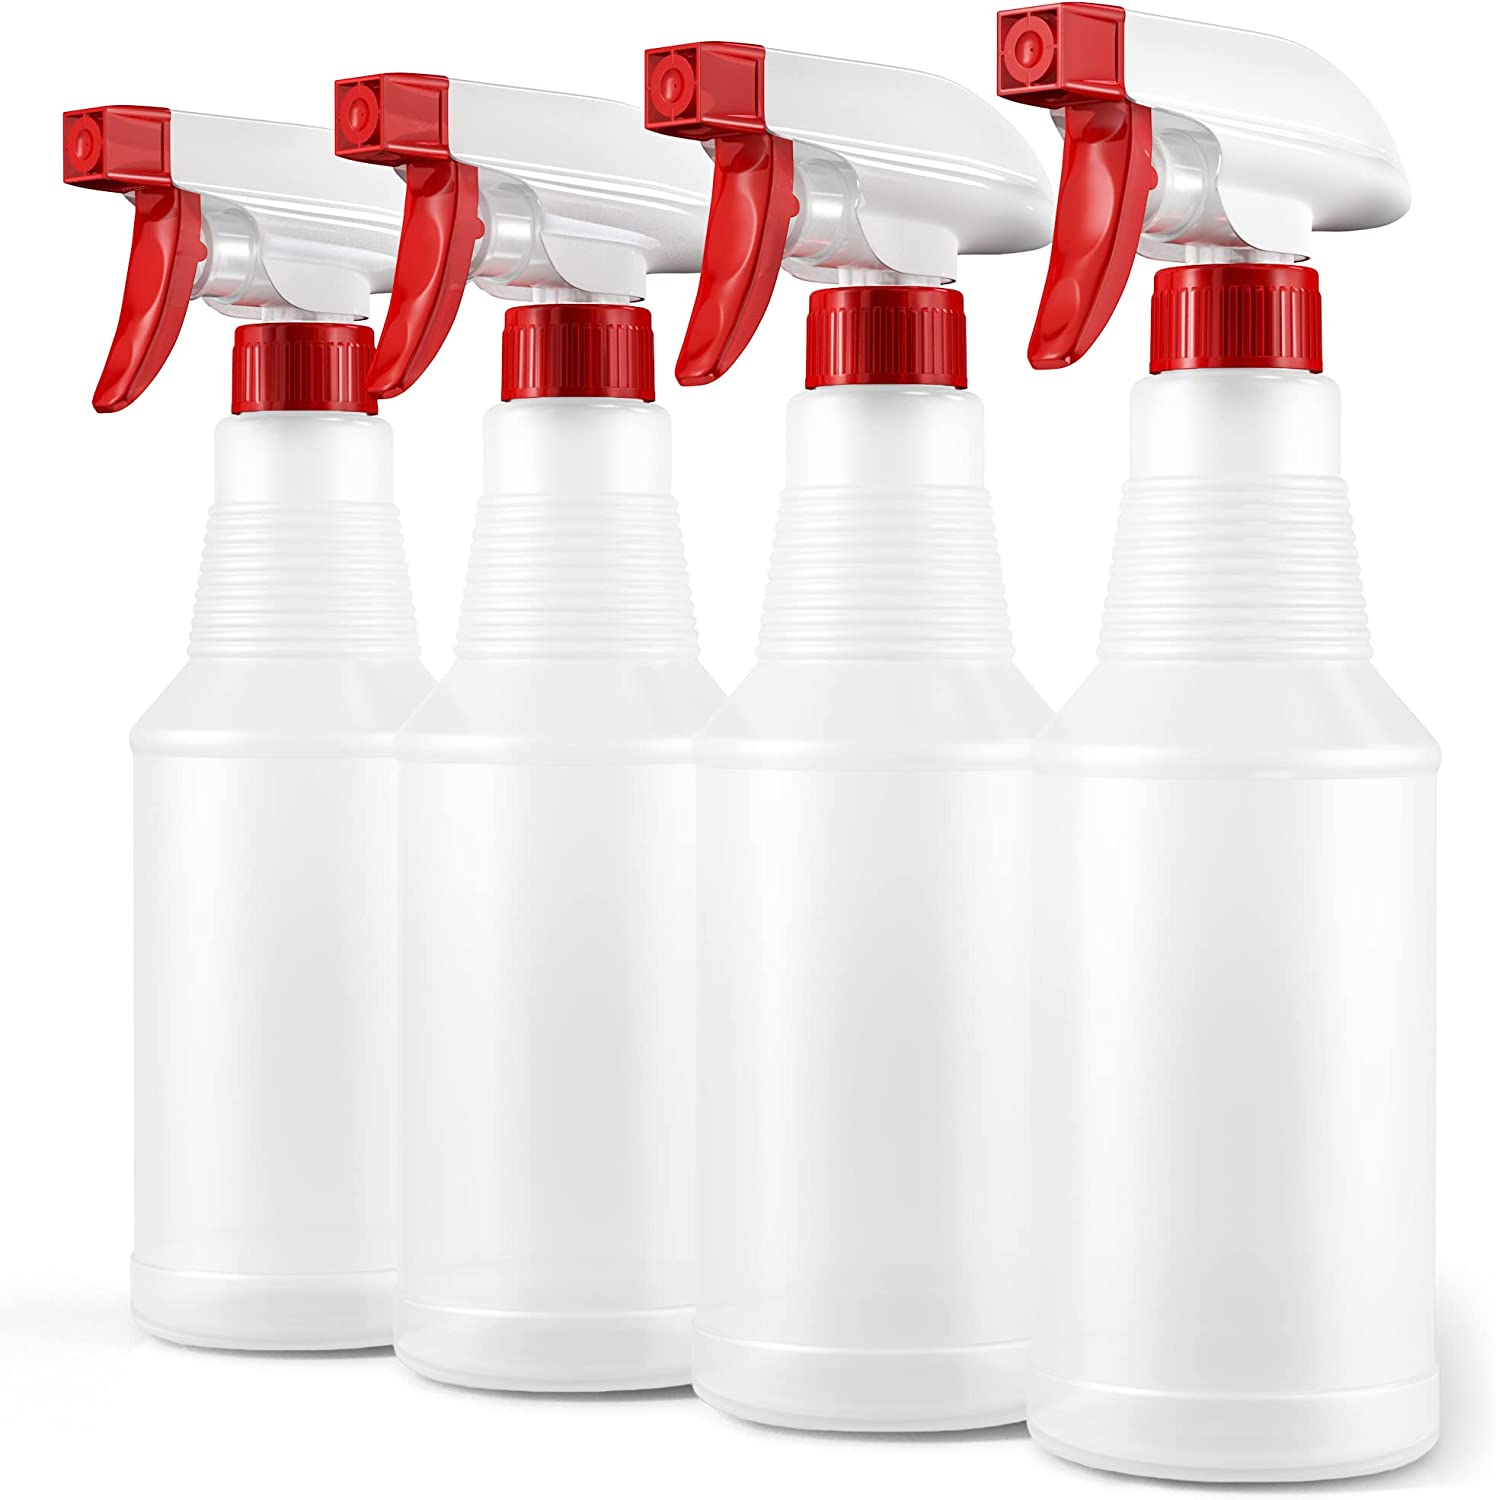 LiBa Adjustable Nozzle Spray Bottles, 4-Pack